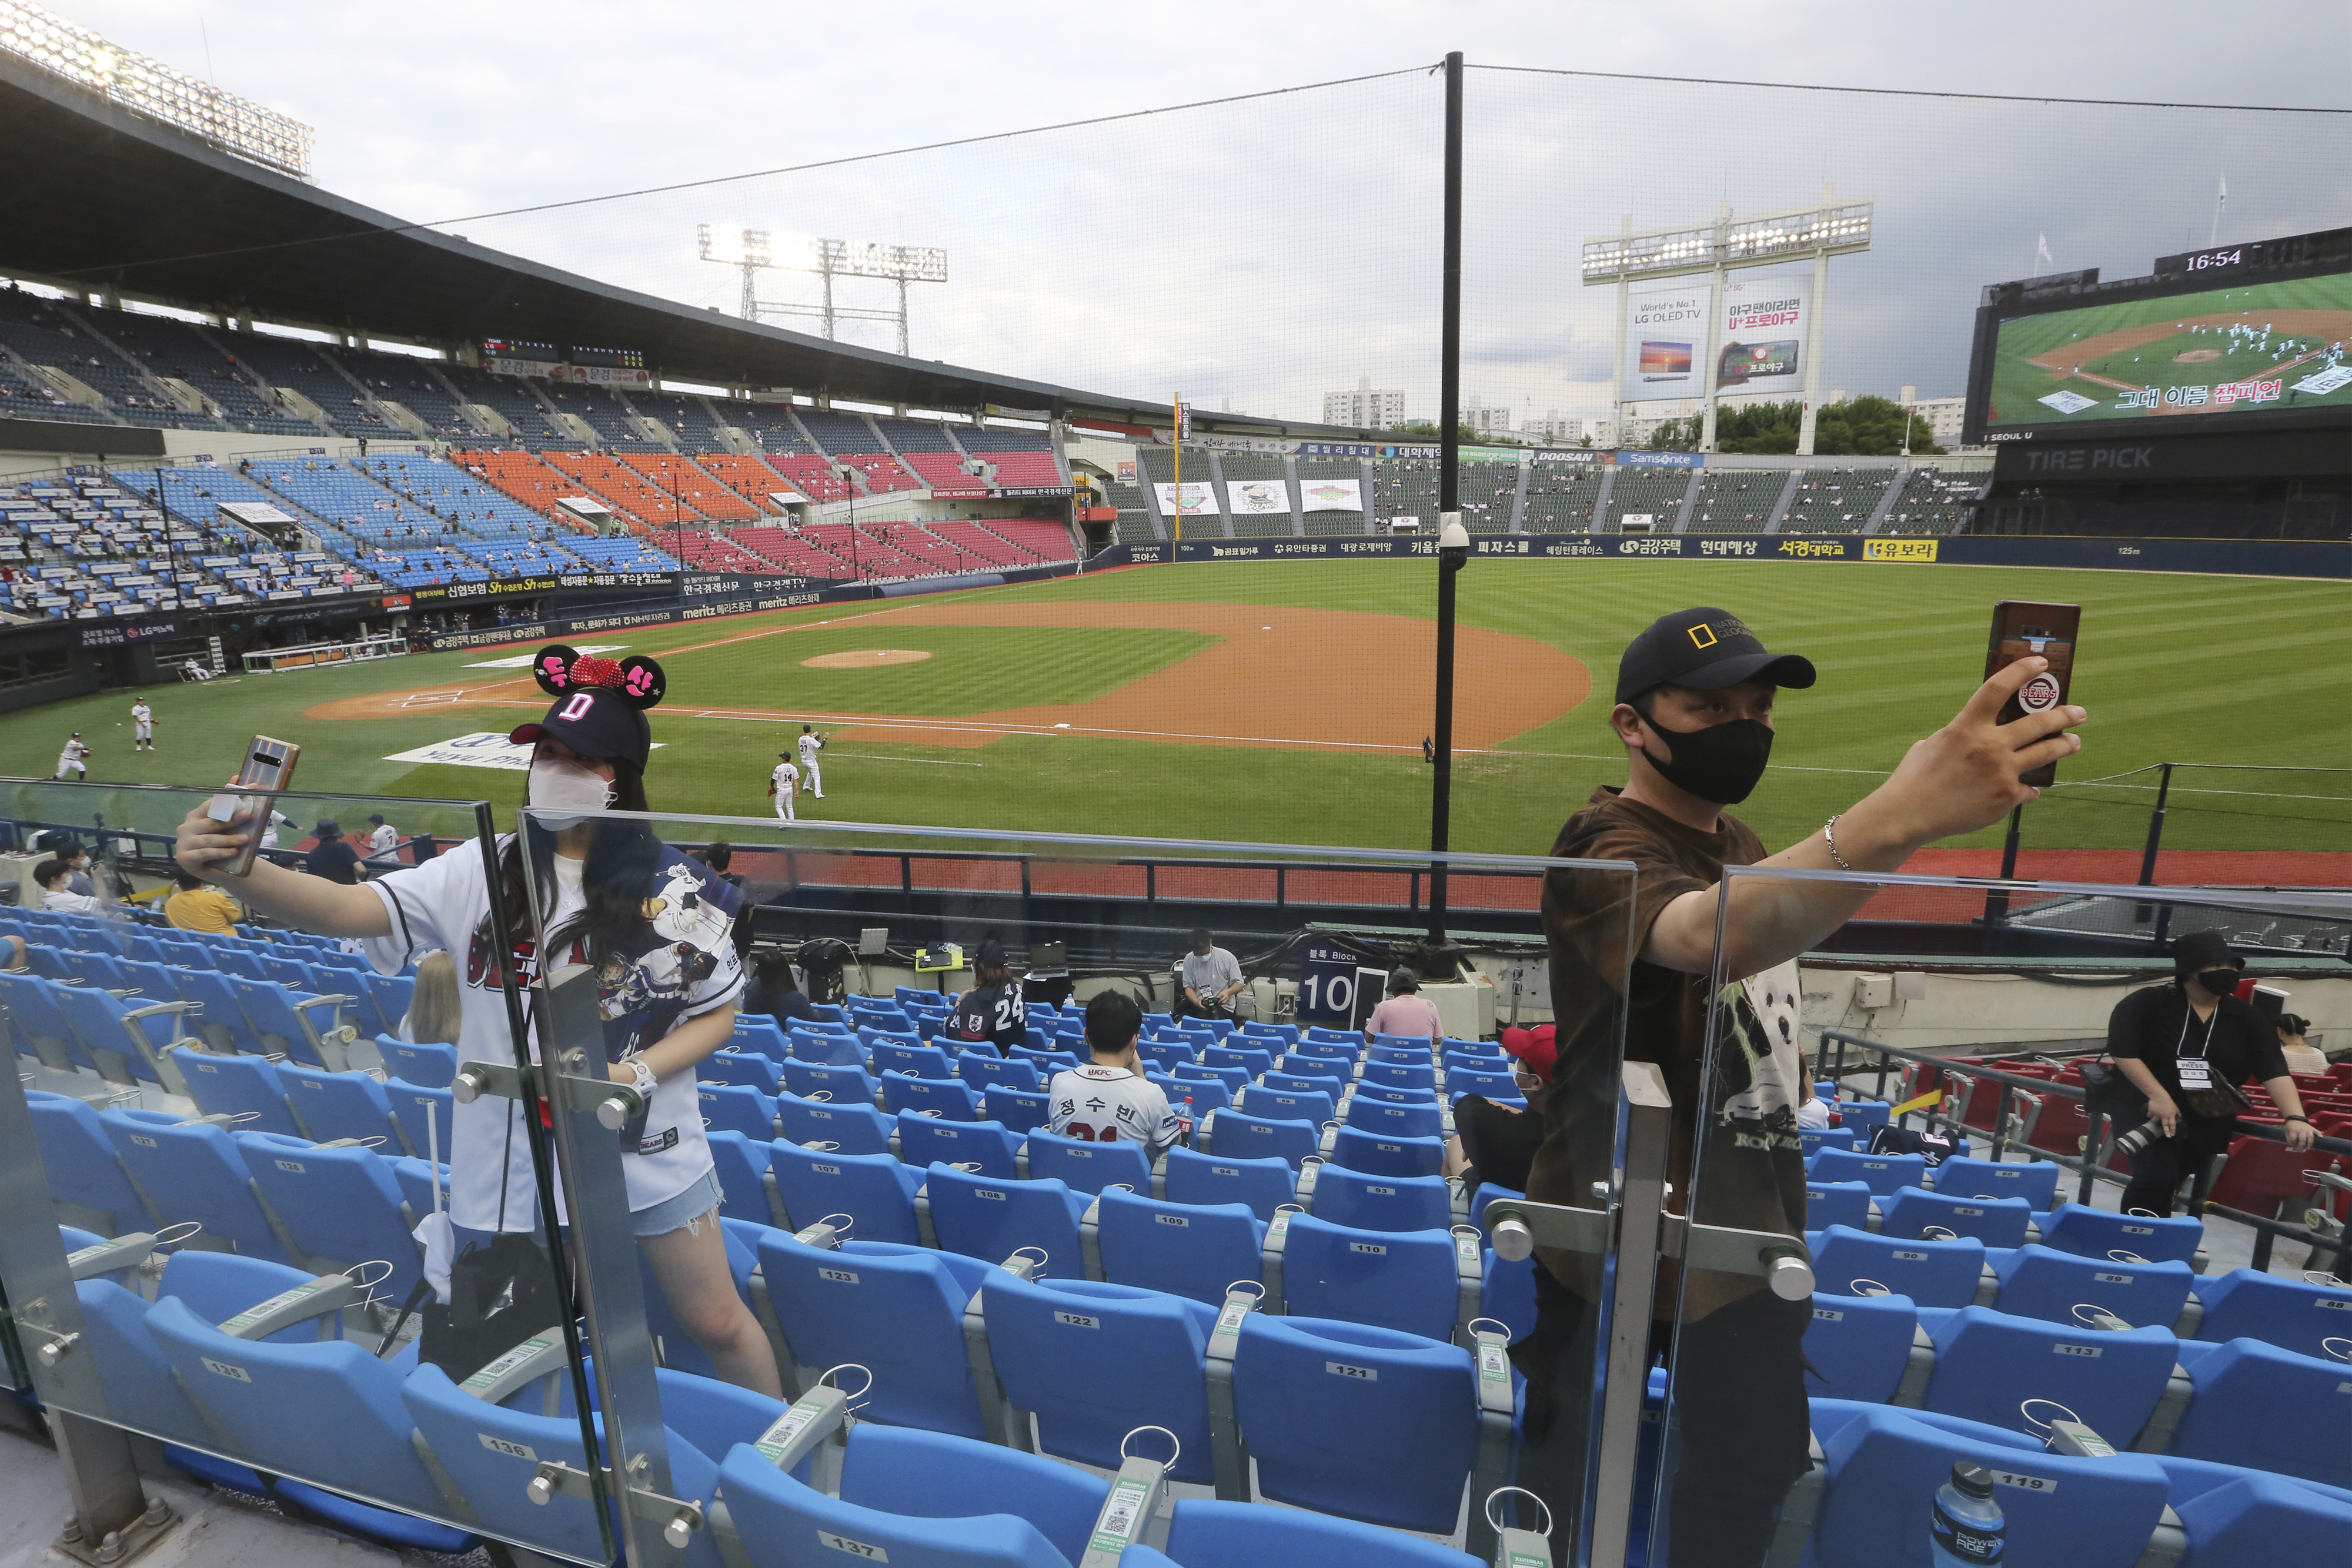 Jamshil baseball stadium staff prepare the field ahead of LG